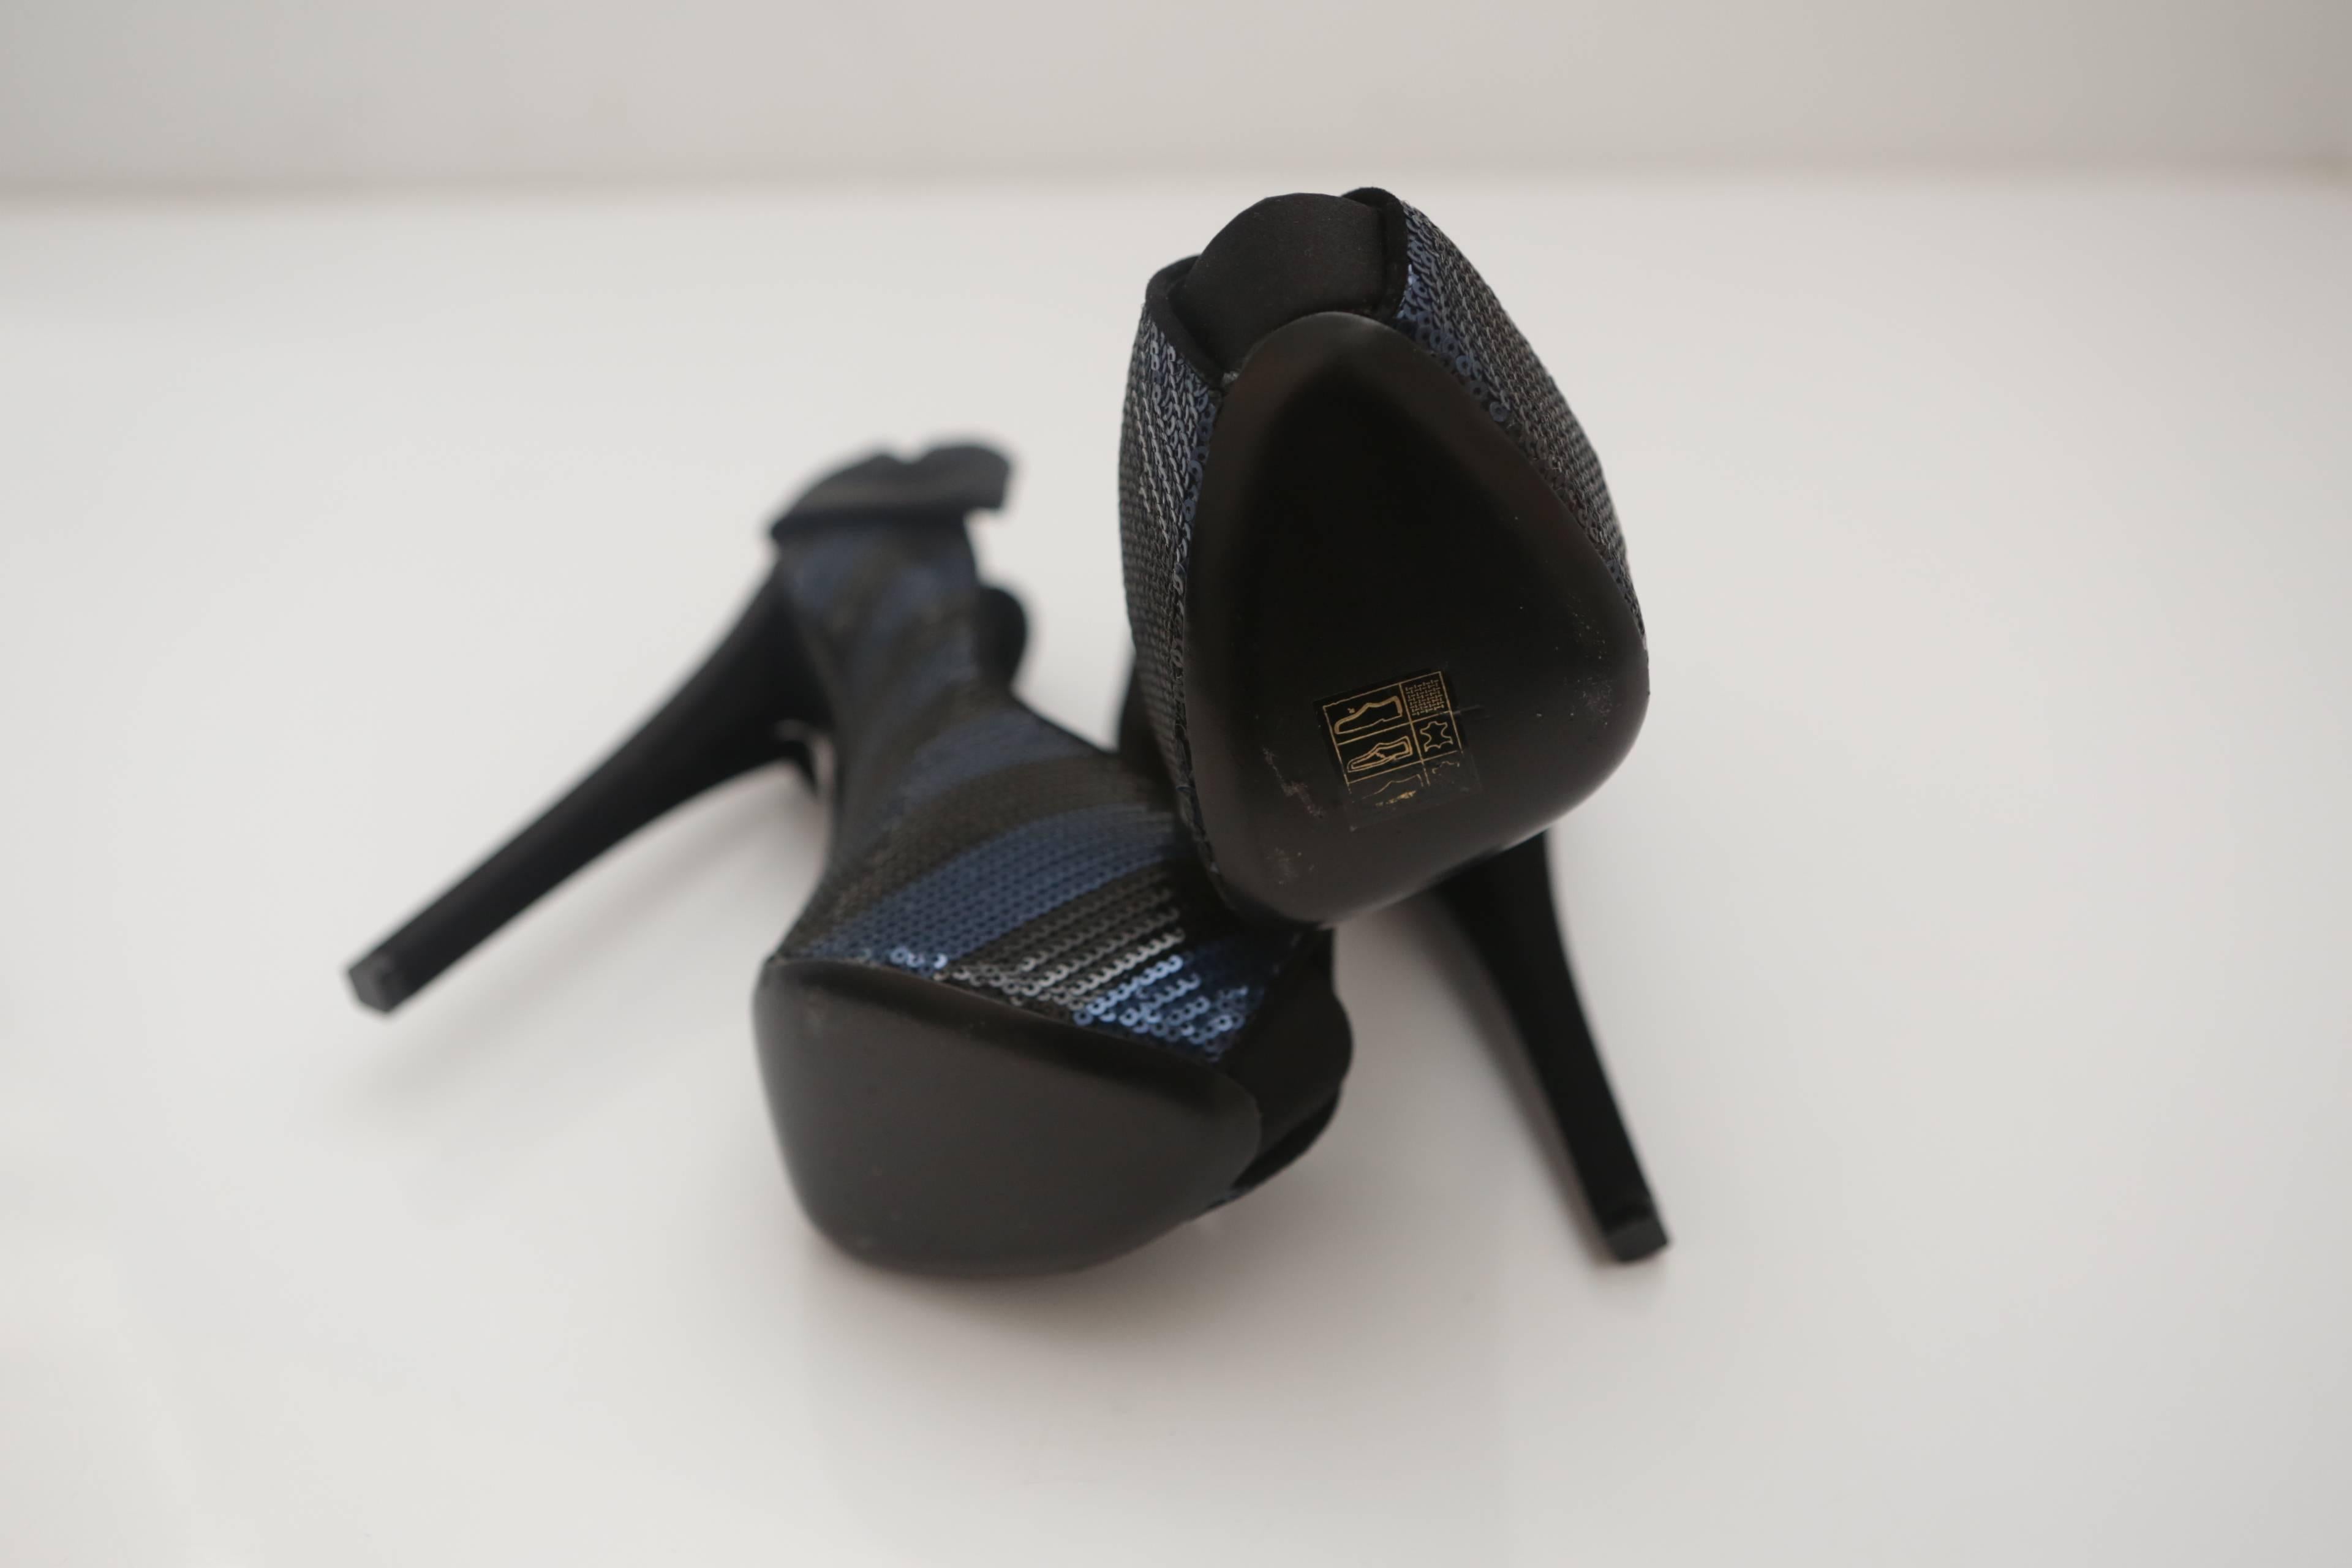 Black Louis Vuitton Sequin Peep-toe Pumps with Bow